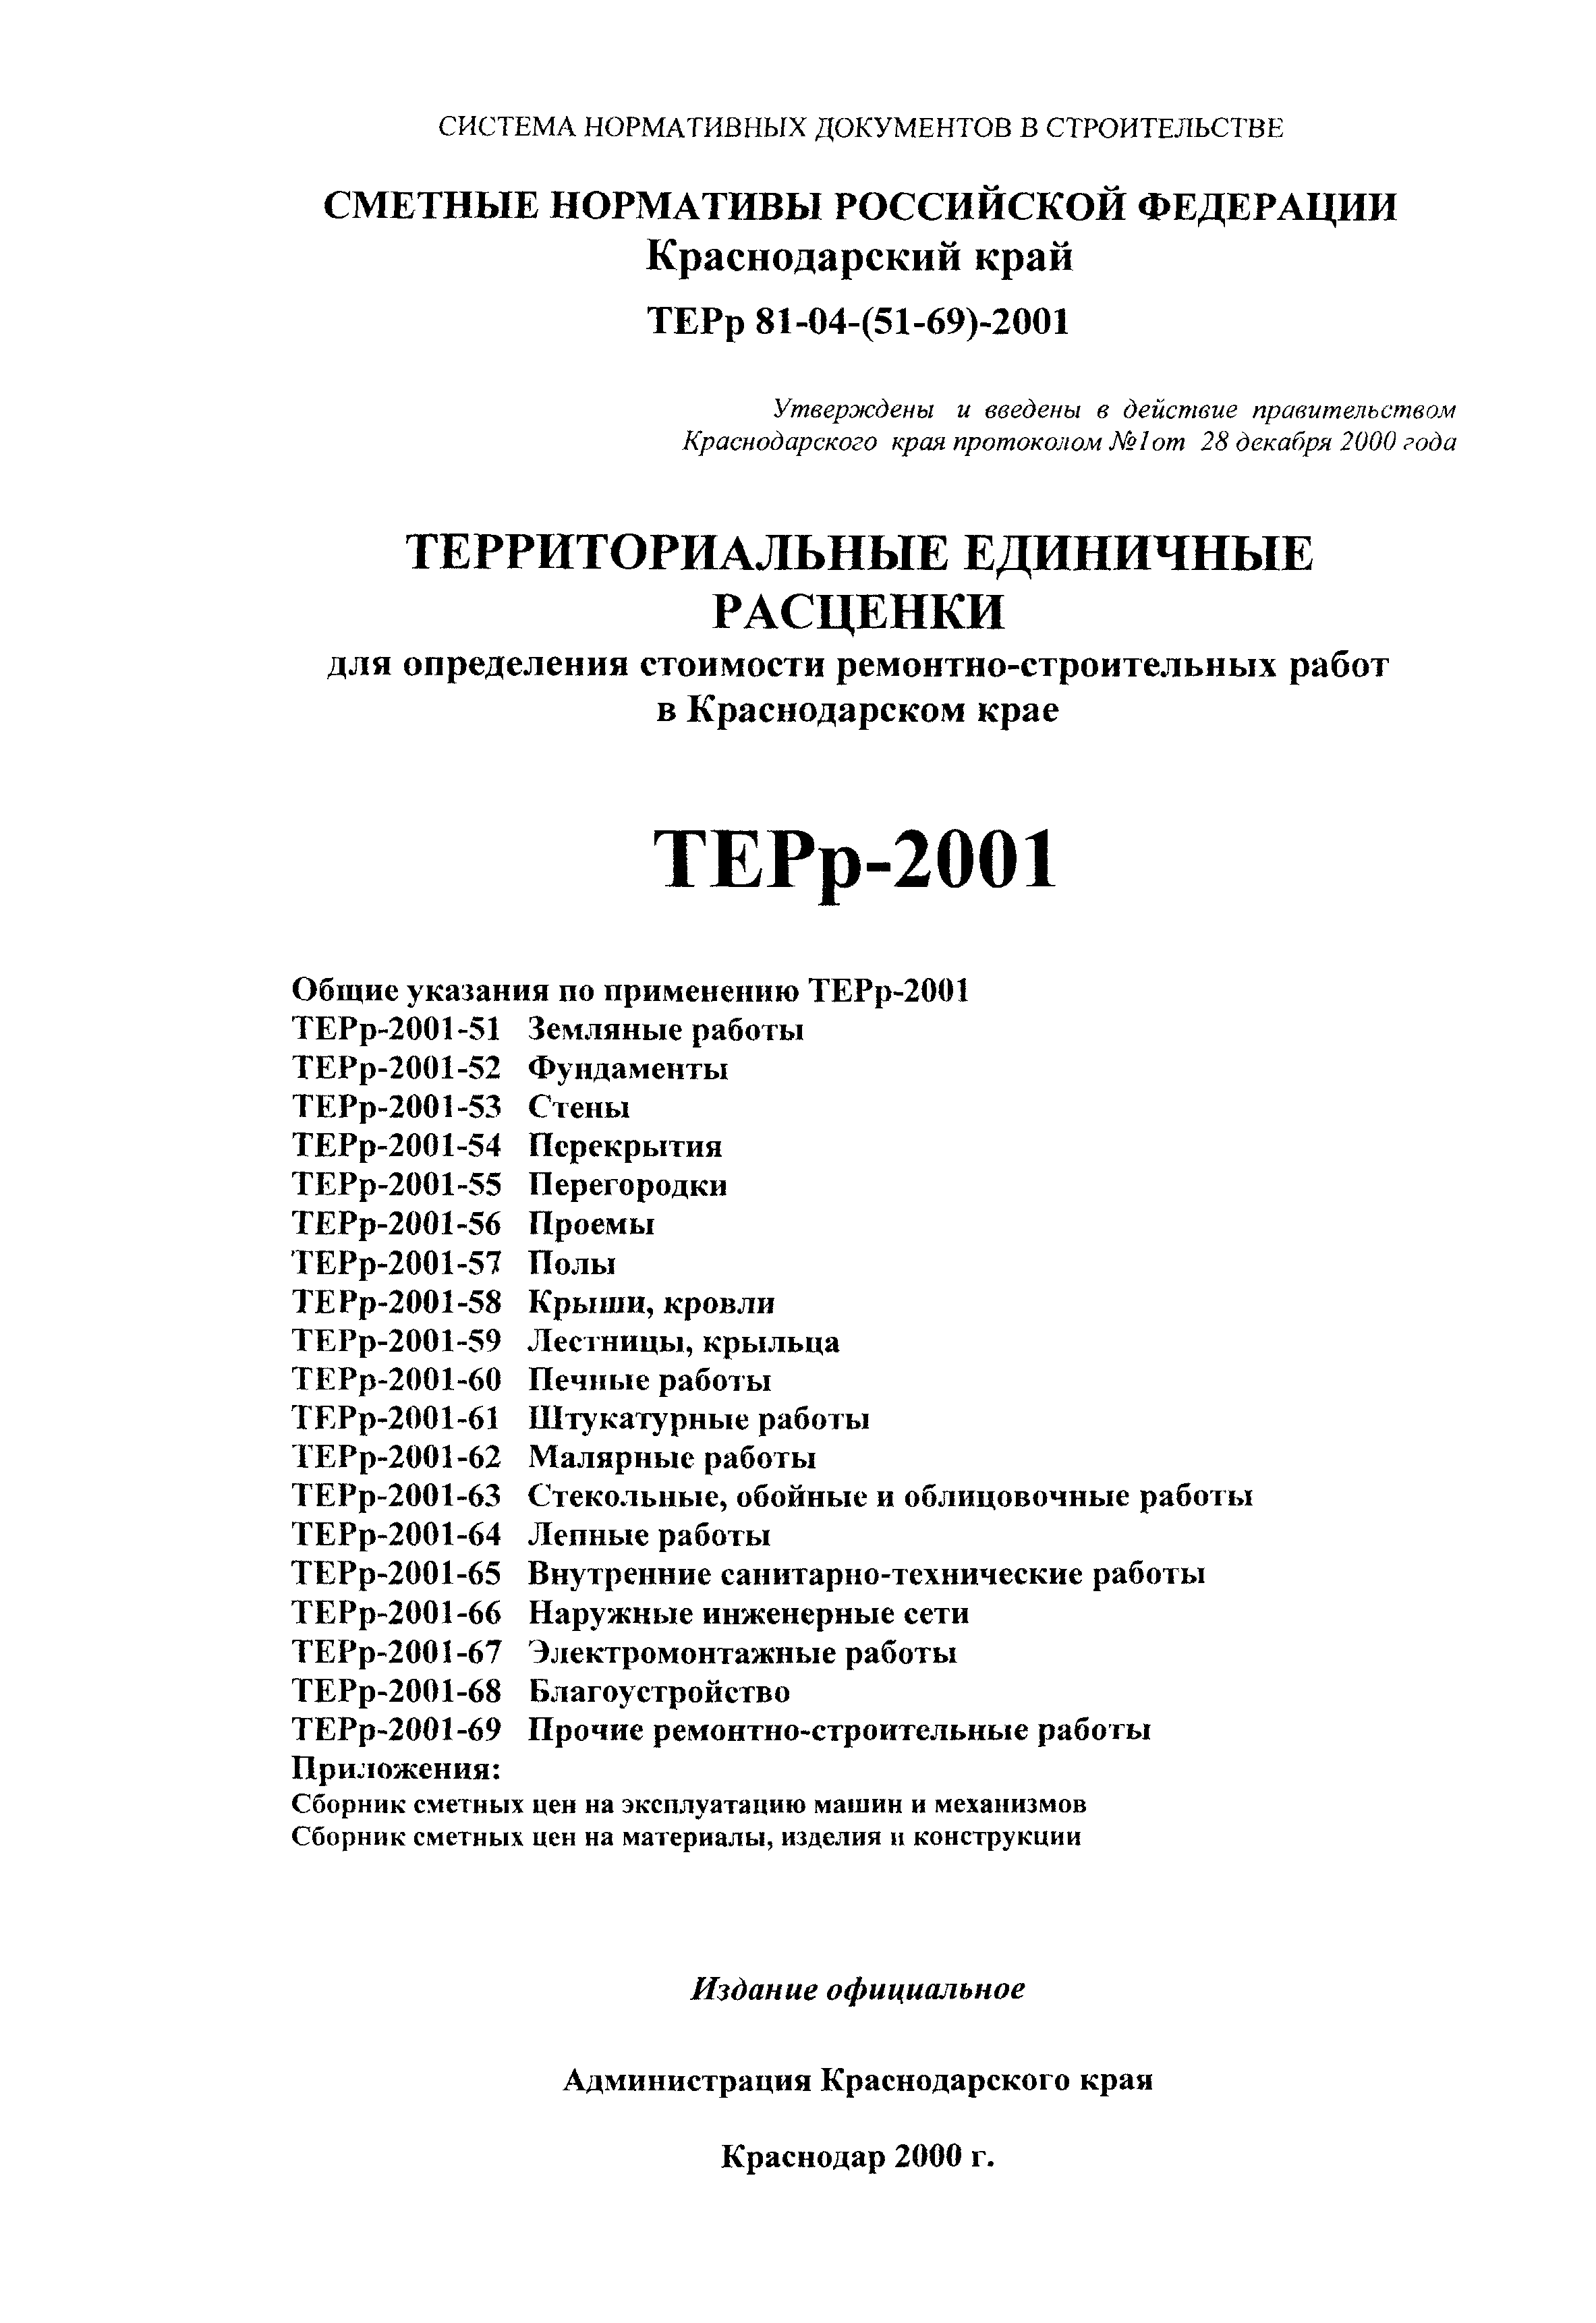 ТЕРр Краснодарский край 2001-53